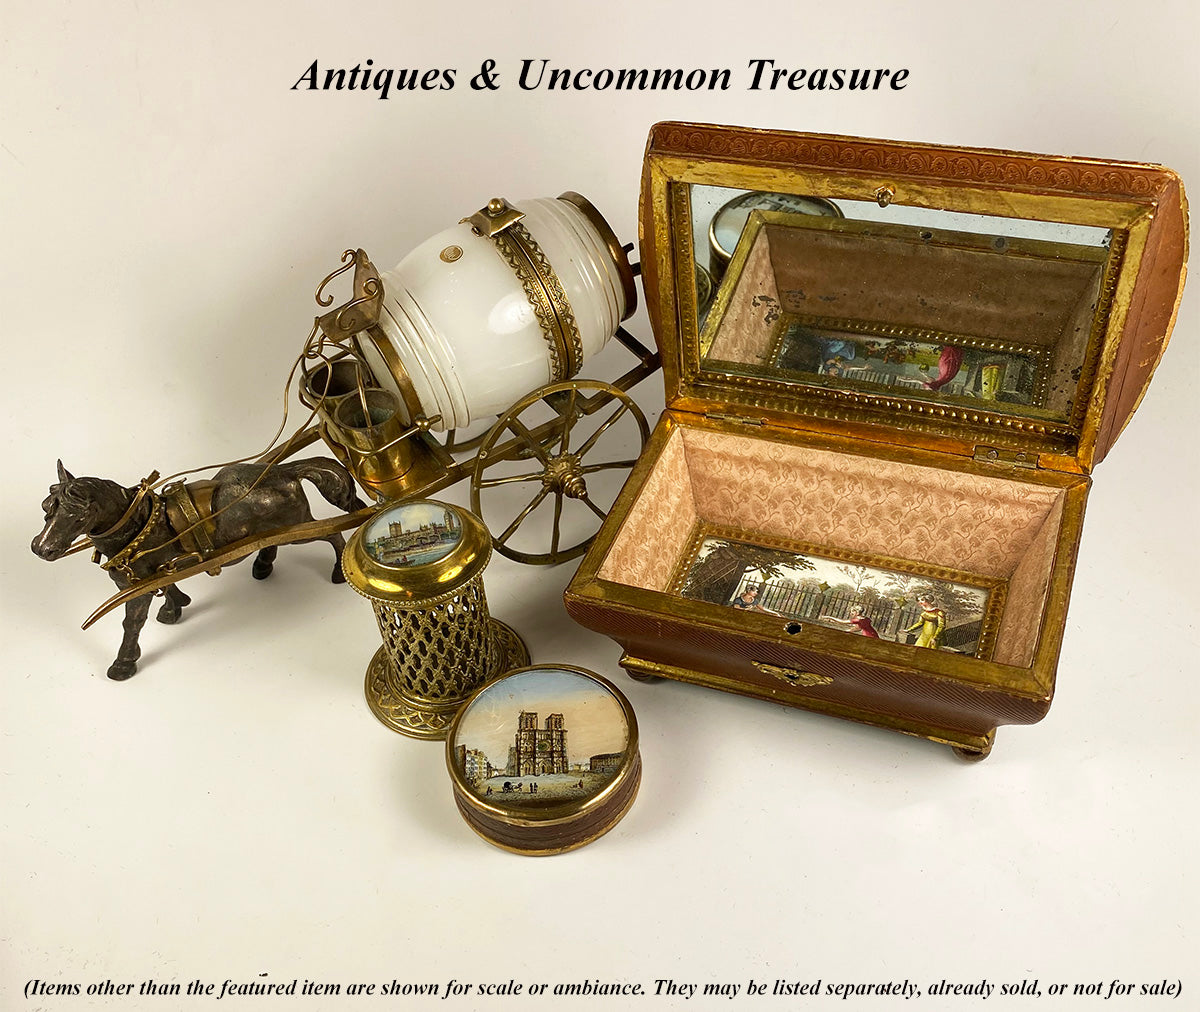 RARE Large c.1770-1810 French Louis XVI Chocolatier's Confection or Chocolates Box, Eglomise Jewelry Casket